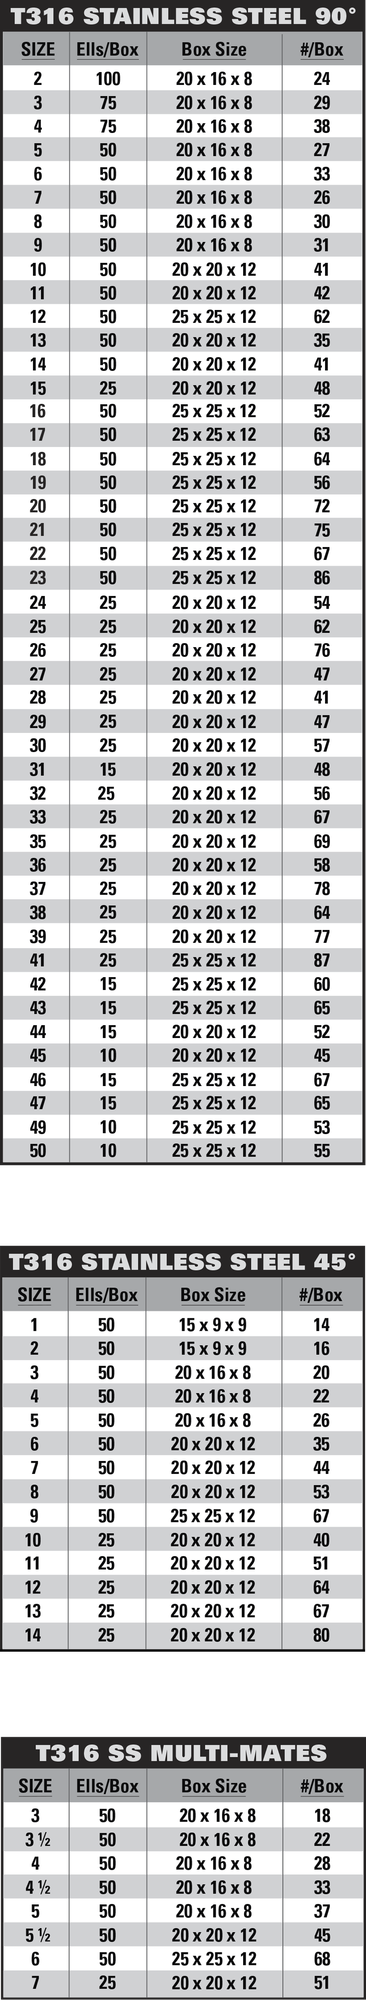 Ss Elbow Weight Chart